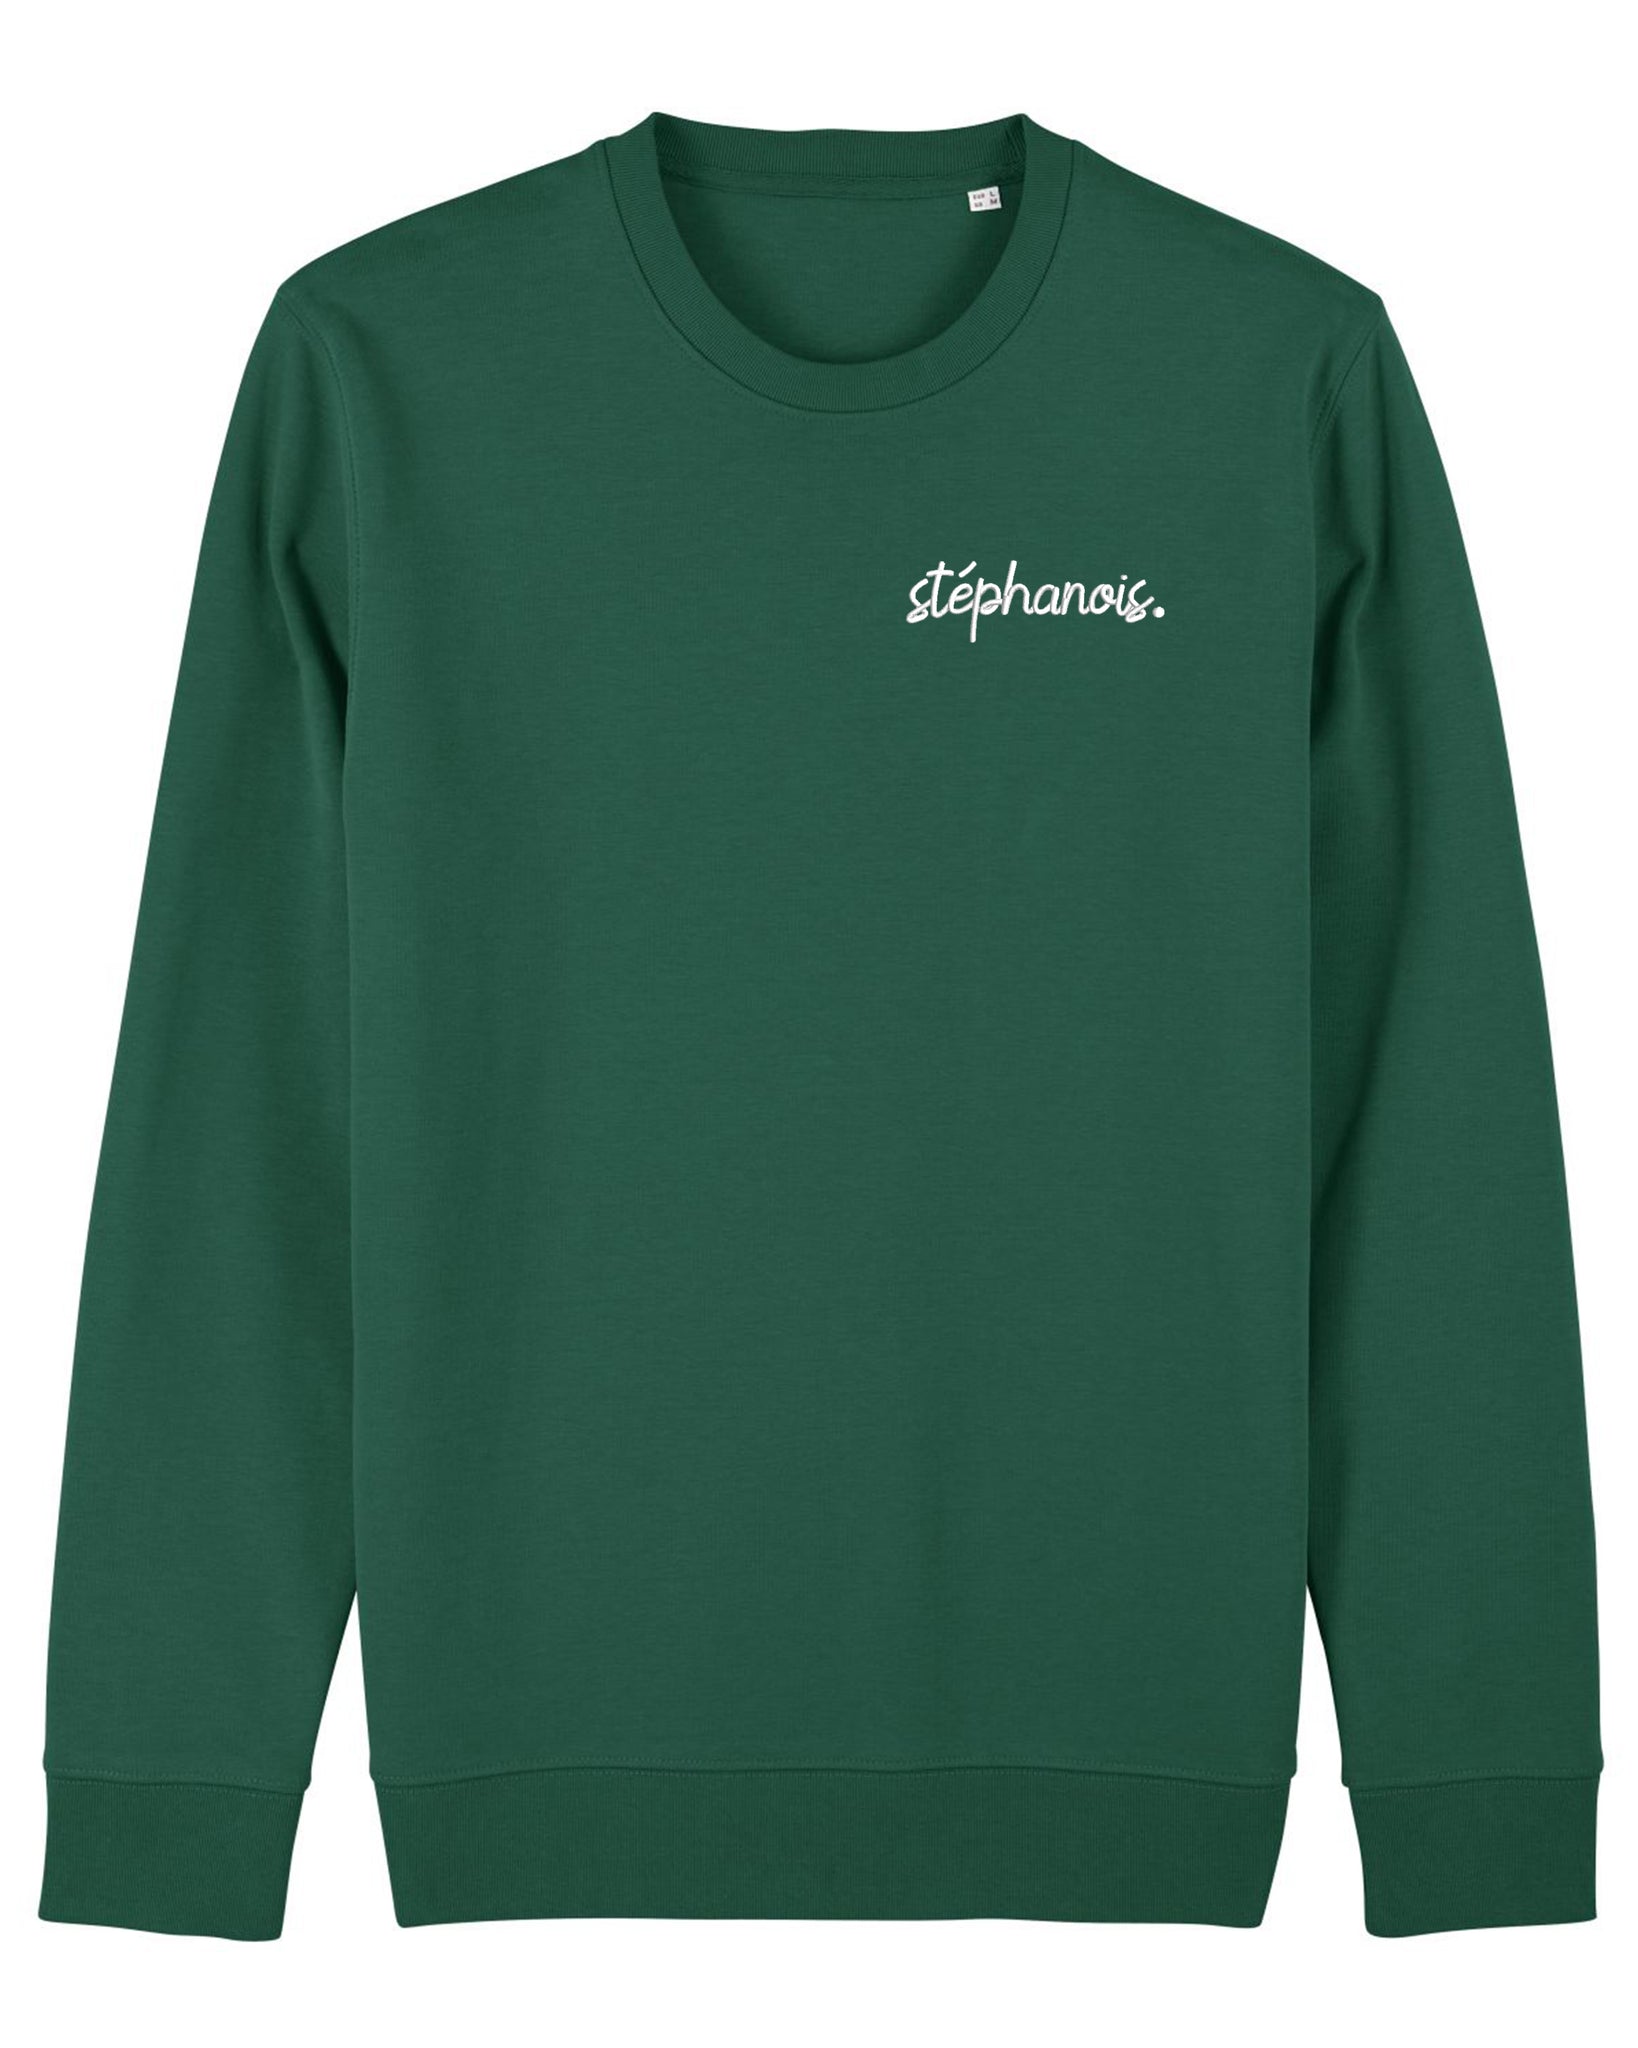 Embroidered Stéphanois sweatshirt